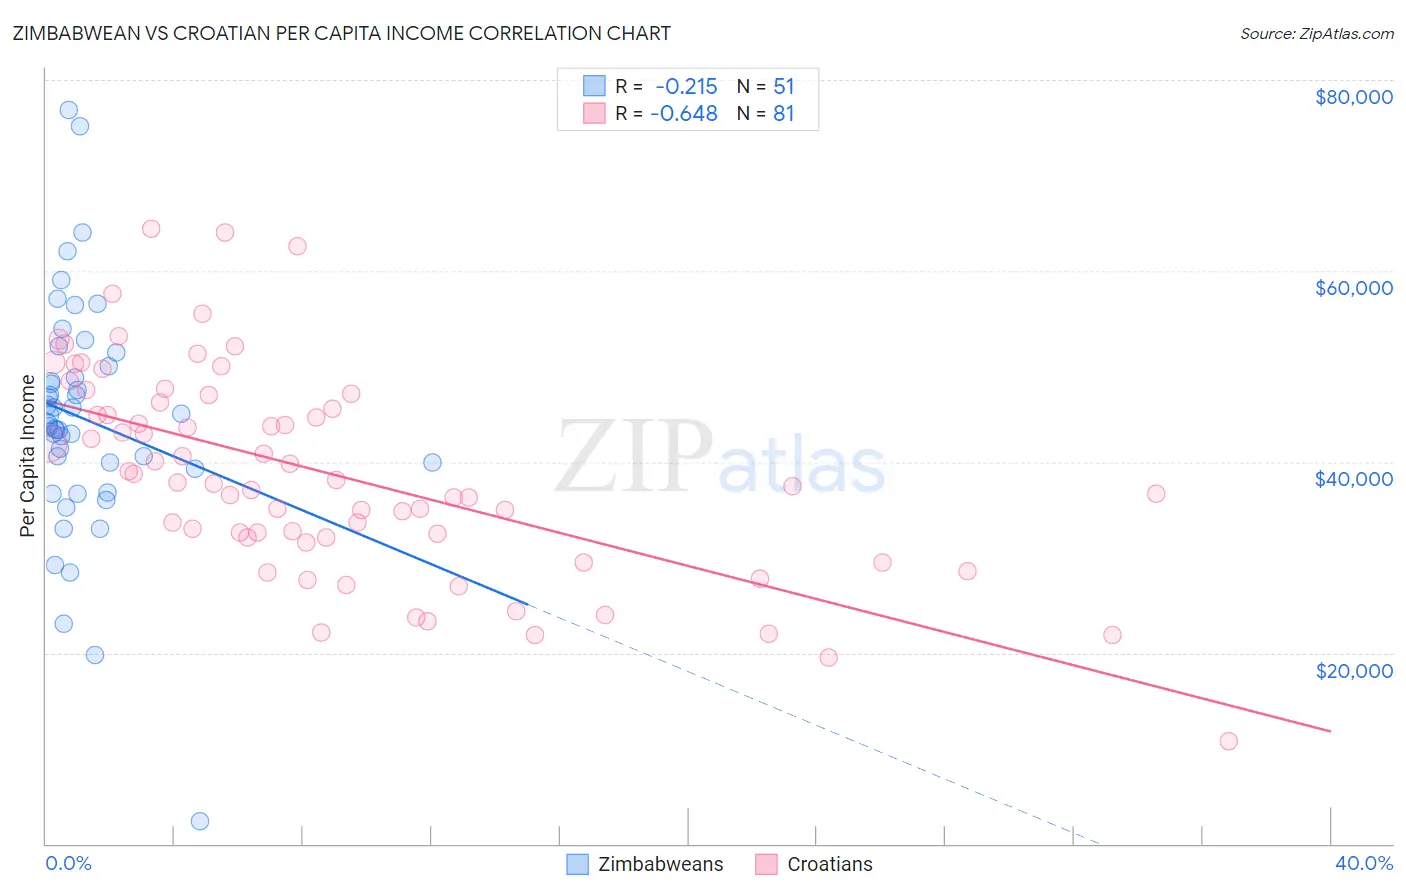 Zimbabwean vs Croatian Per Capita Income